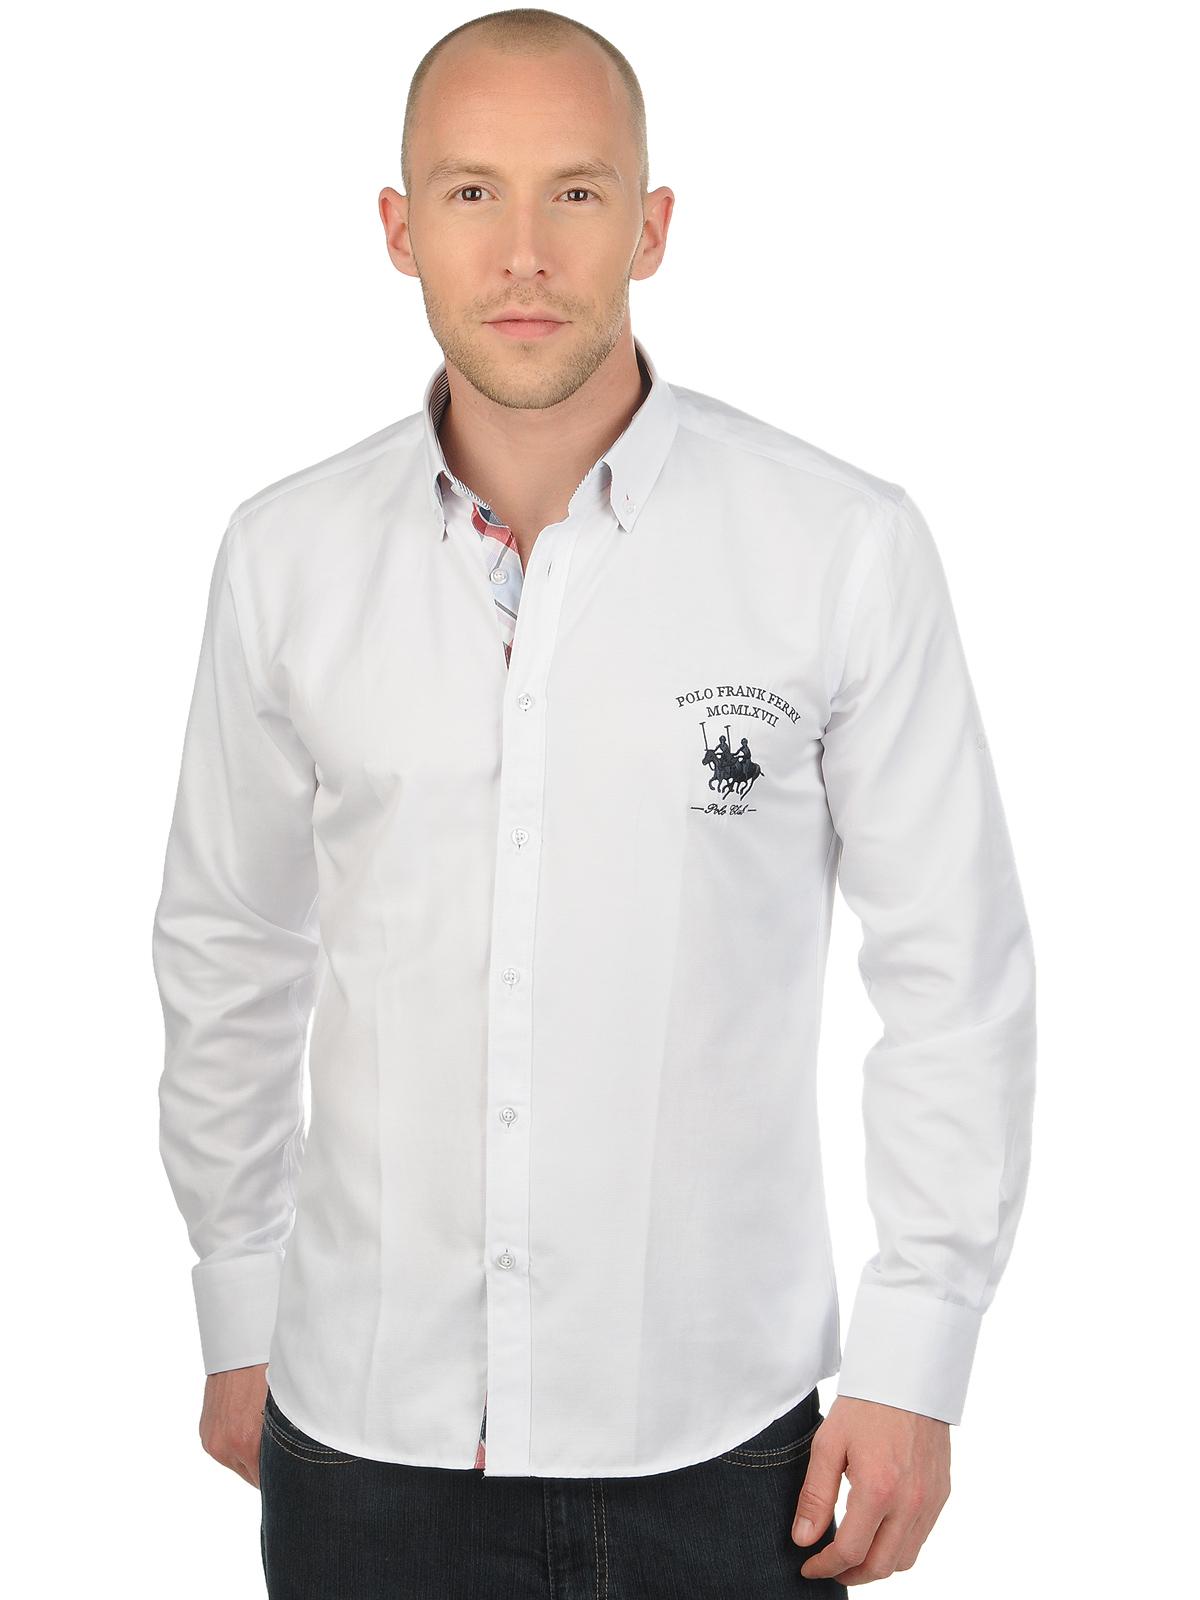 Foto Frank Ferry Polo Club Camisa Regular Fit blanco M